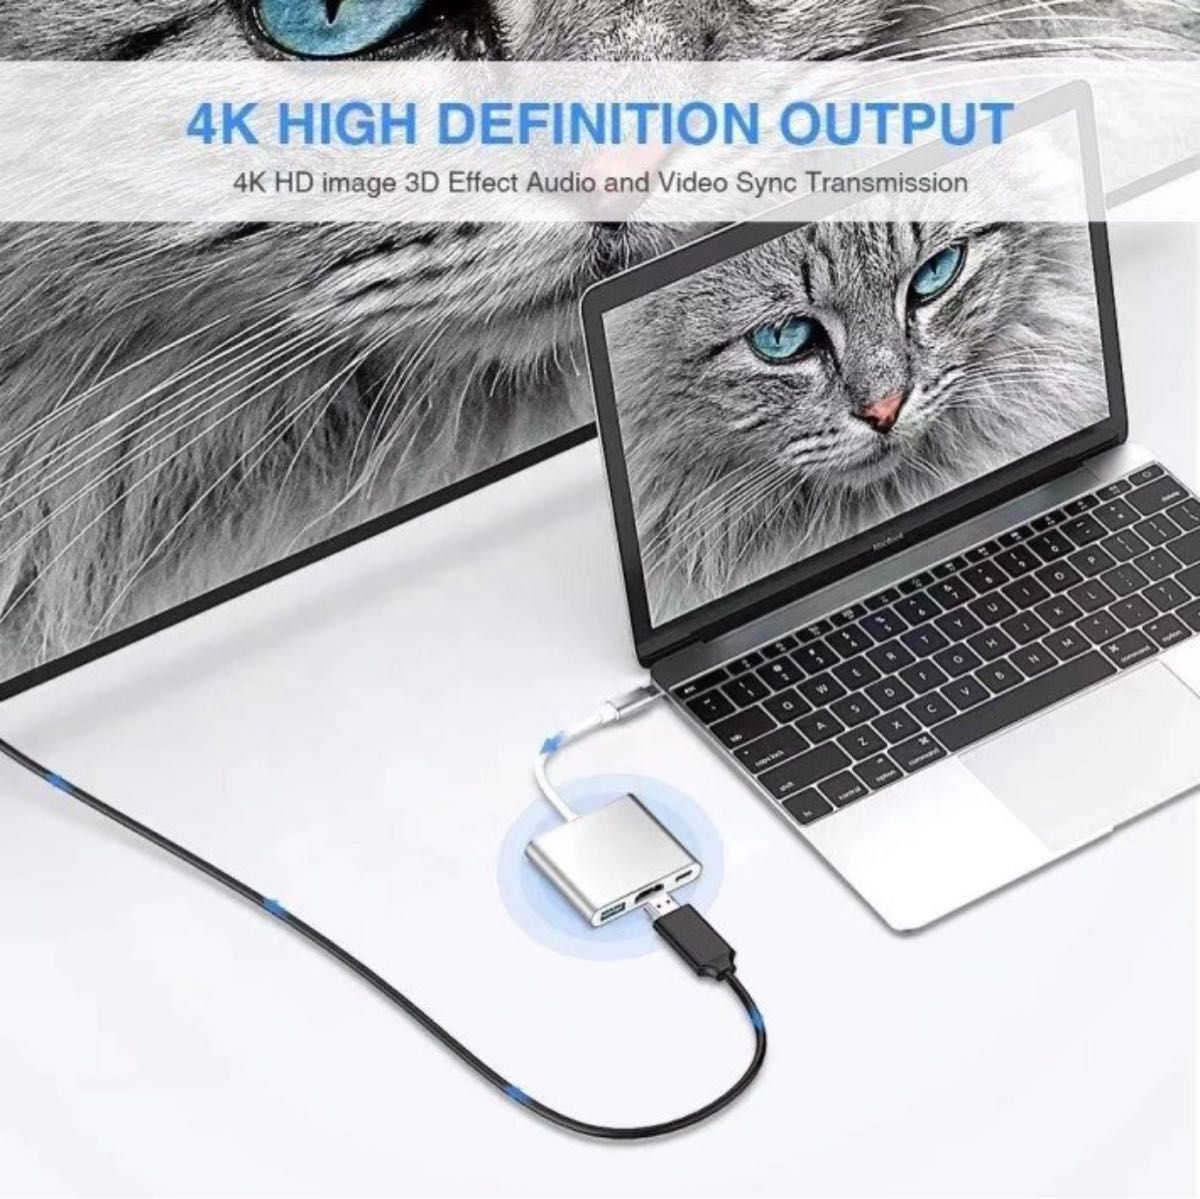 USB TypeC - HDMI マルチ変換アダプター 4K対応 シルバー 新品